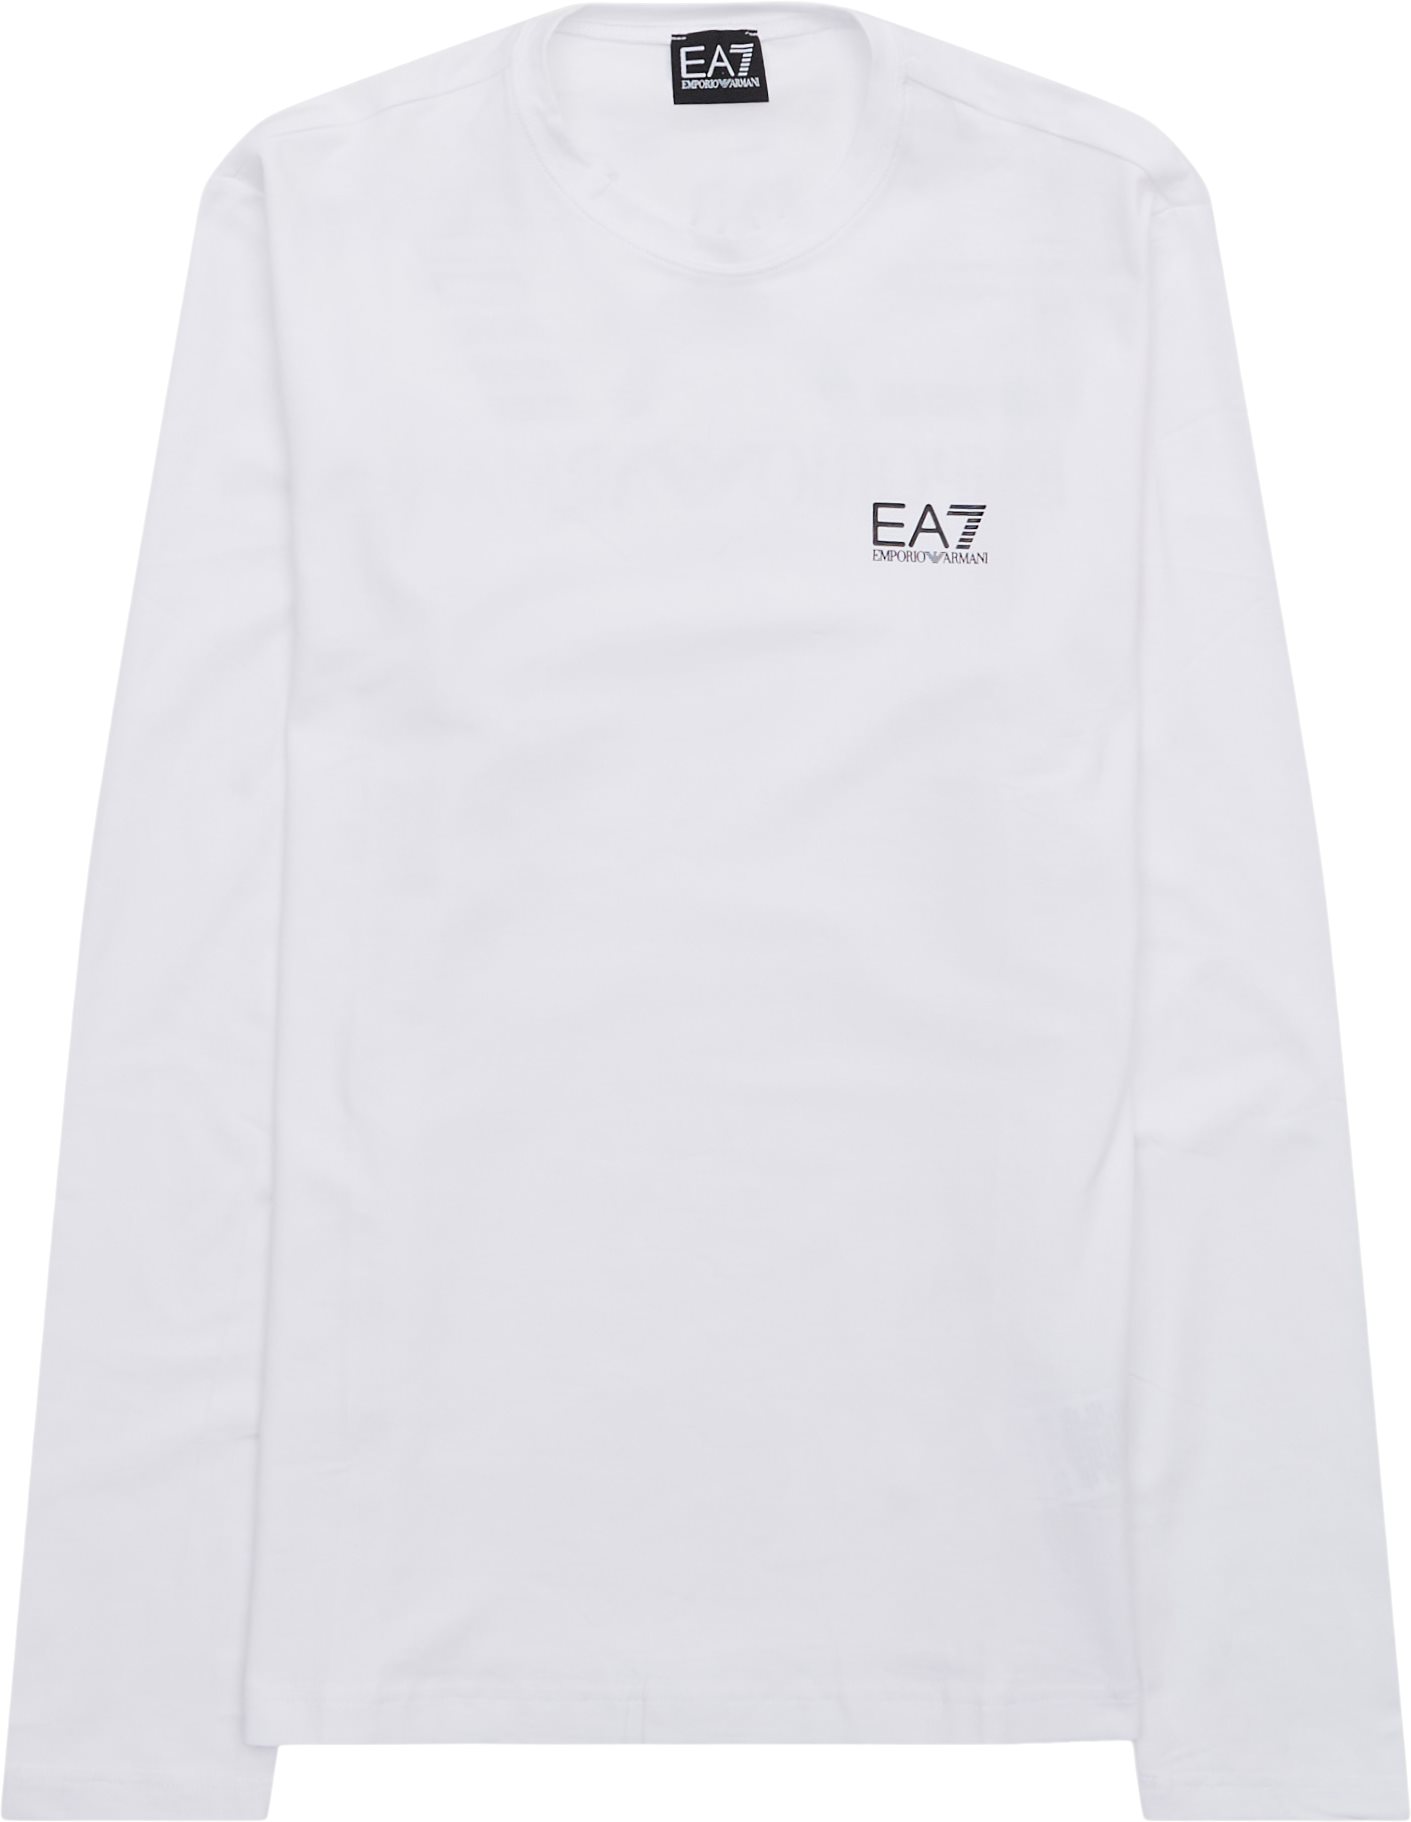 EA7 T-shirts PJLBZ-3RPT08 White